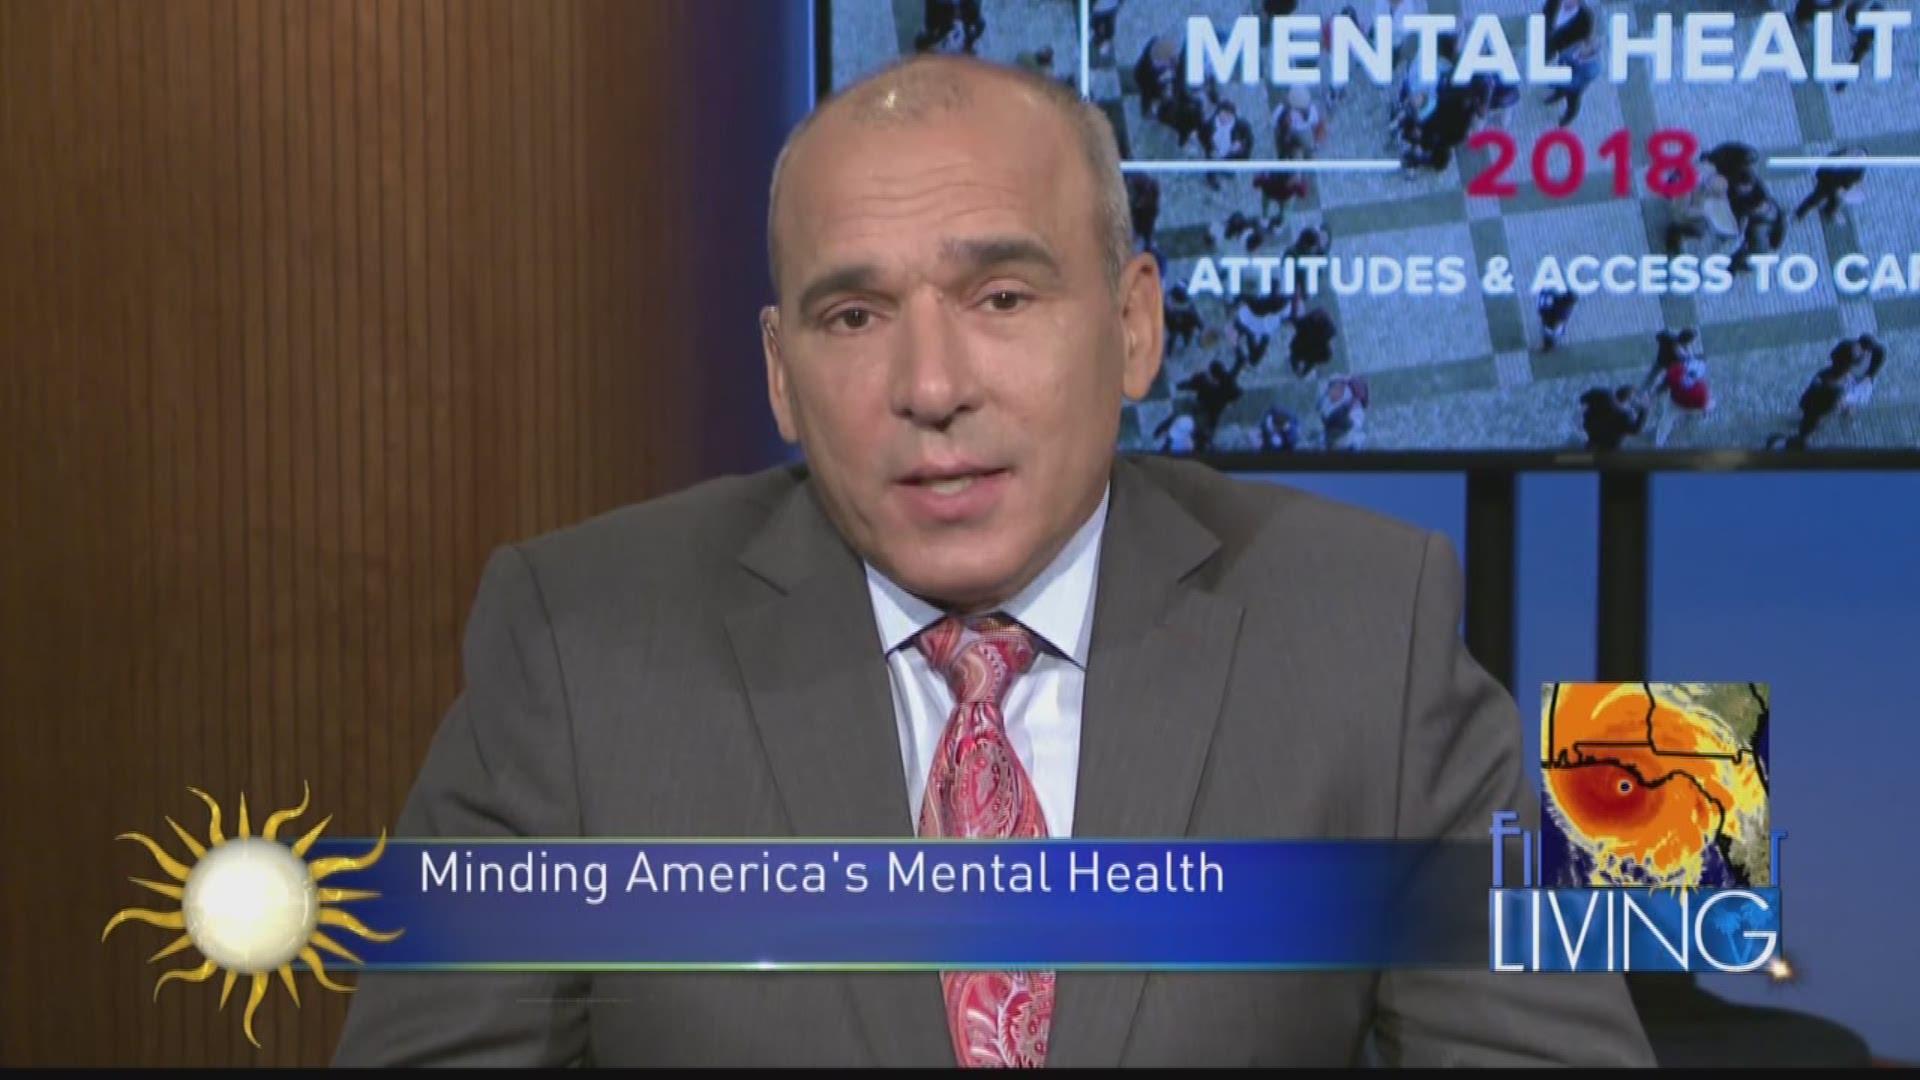 Minding America's Mental Health